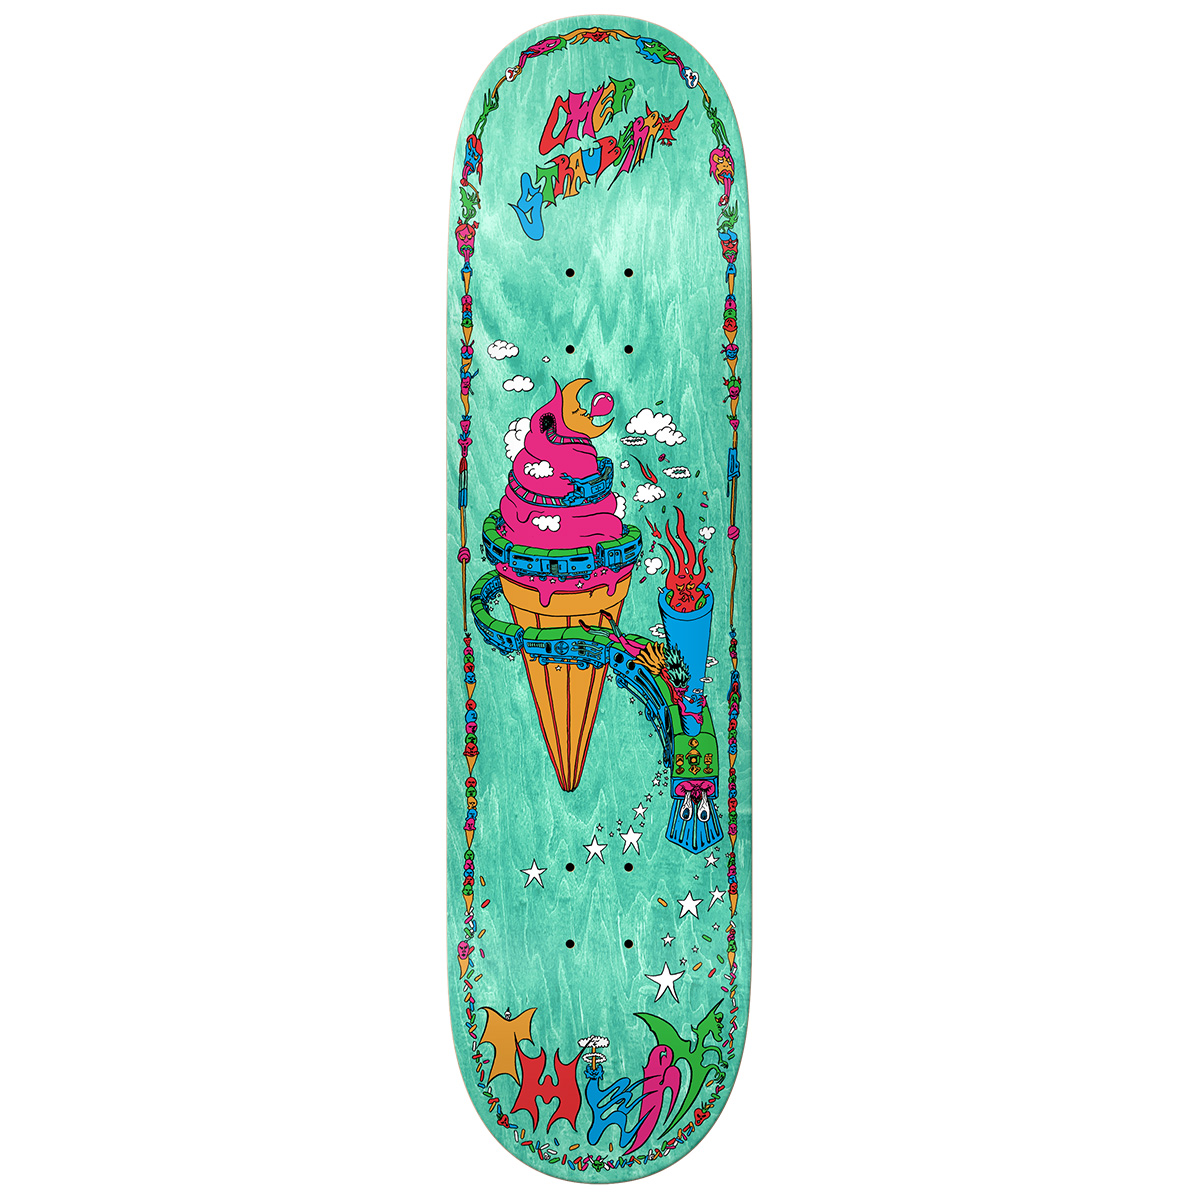 There Cher Sam Ryser Series Skateboard Deck 8.25